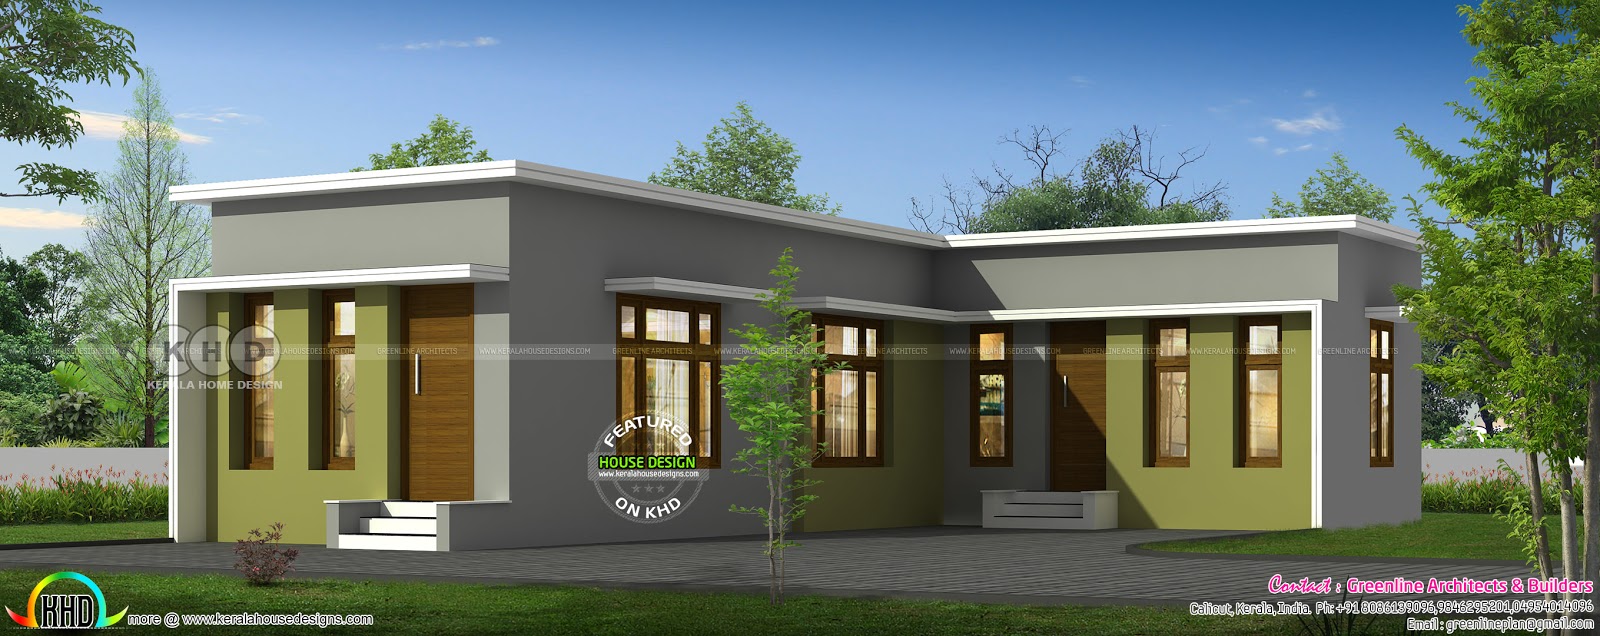 1800 sq-ft 3 bedroom flat roof single floor - Kerala home design and